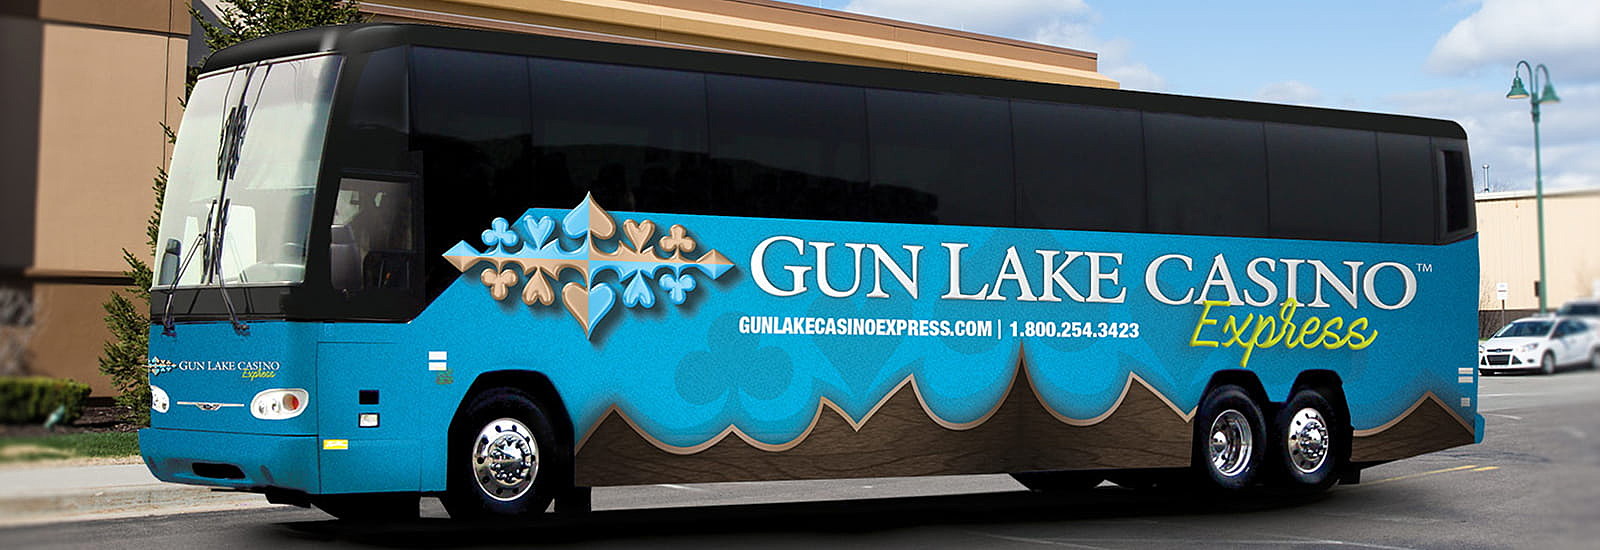 gun lake casino human resources phone number